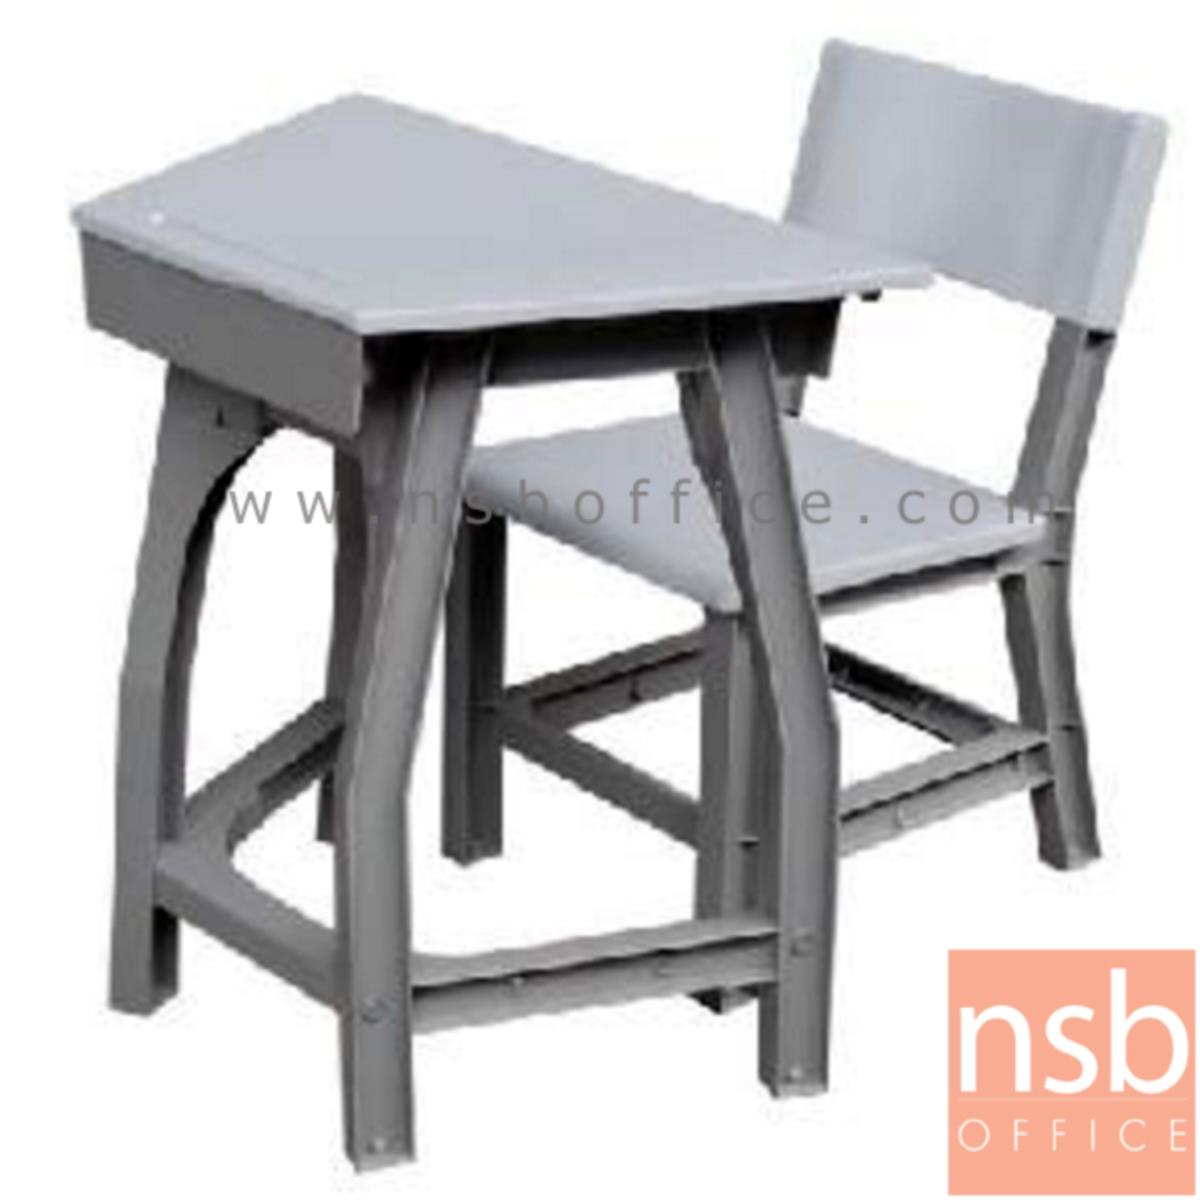 A17A039:ชุดโต๊ะและเก้าอี้นักเรียน รุ่น Antique (แอนทีค)  ระดับชั้นอนุบาล ขาพลาสติก